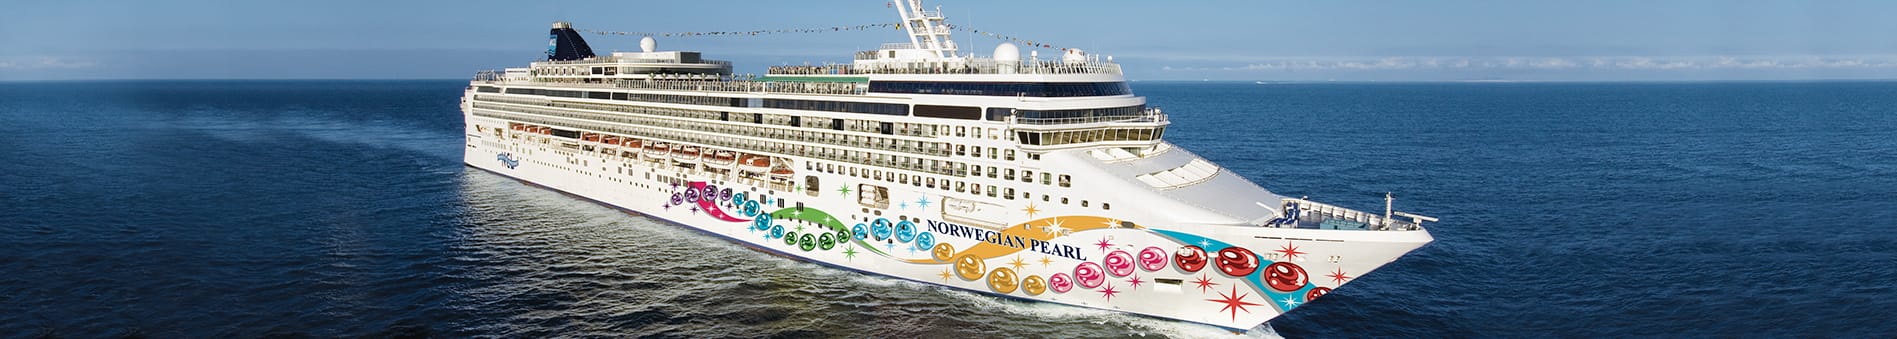 norwegian pearl theme cruises